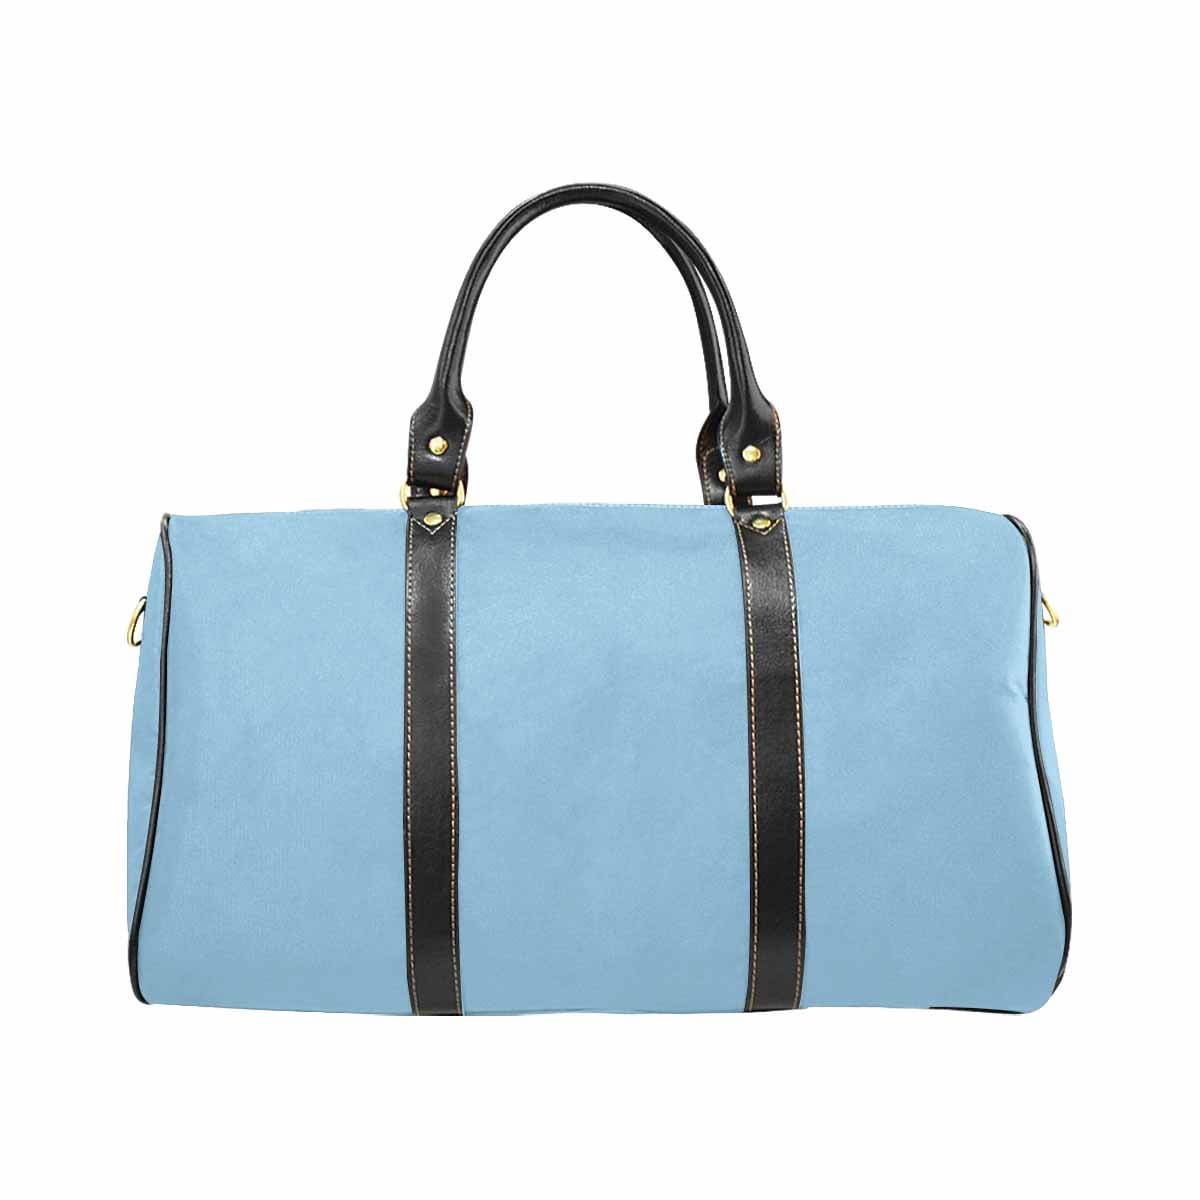 Travel Bag, Leather Carry On Large Luggage Bag, Cornflower Blue